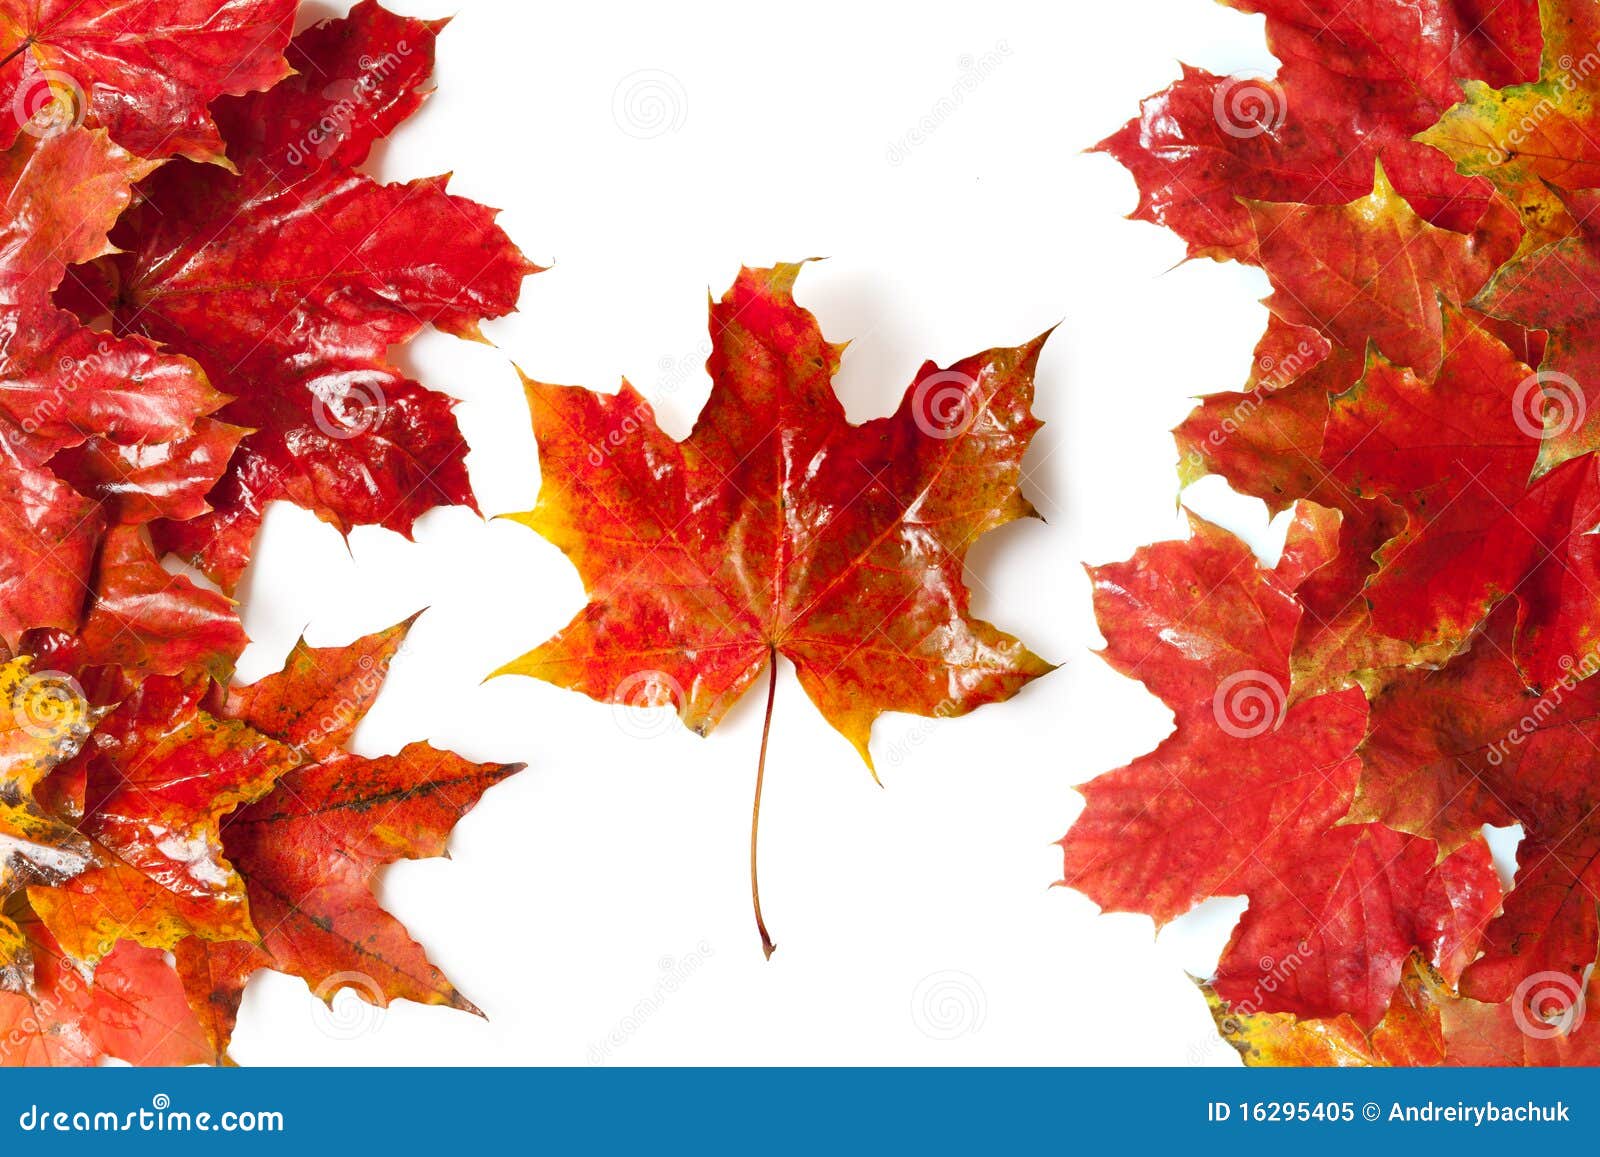 Flag Of Canada Royalty Free Stock Photo - Image: 16295405